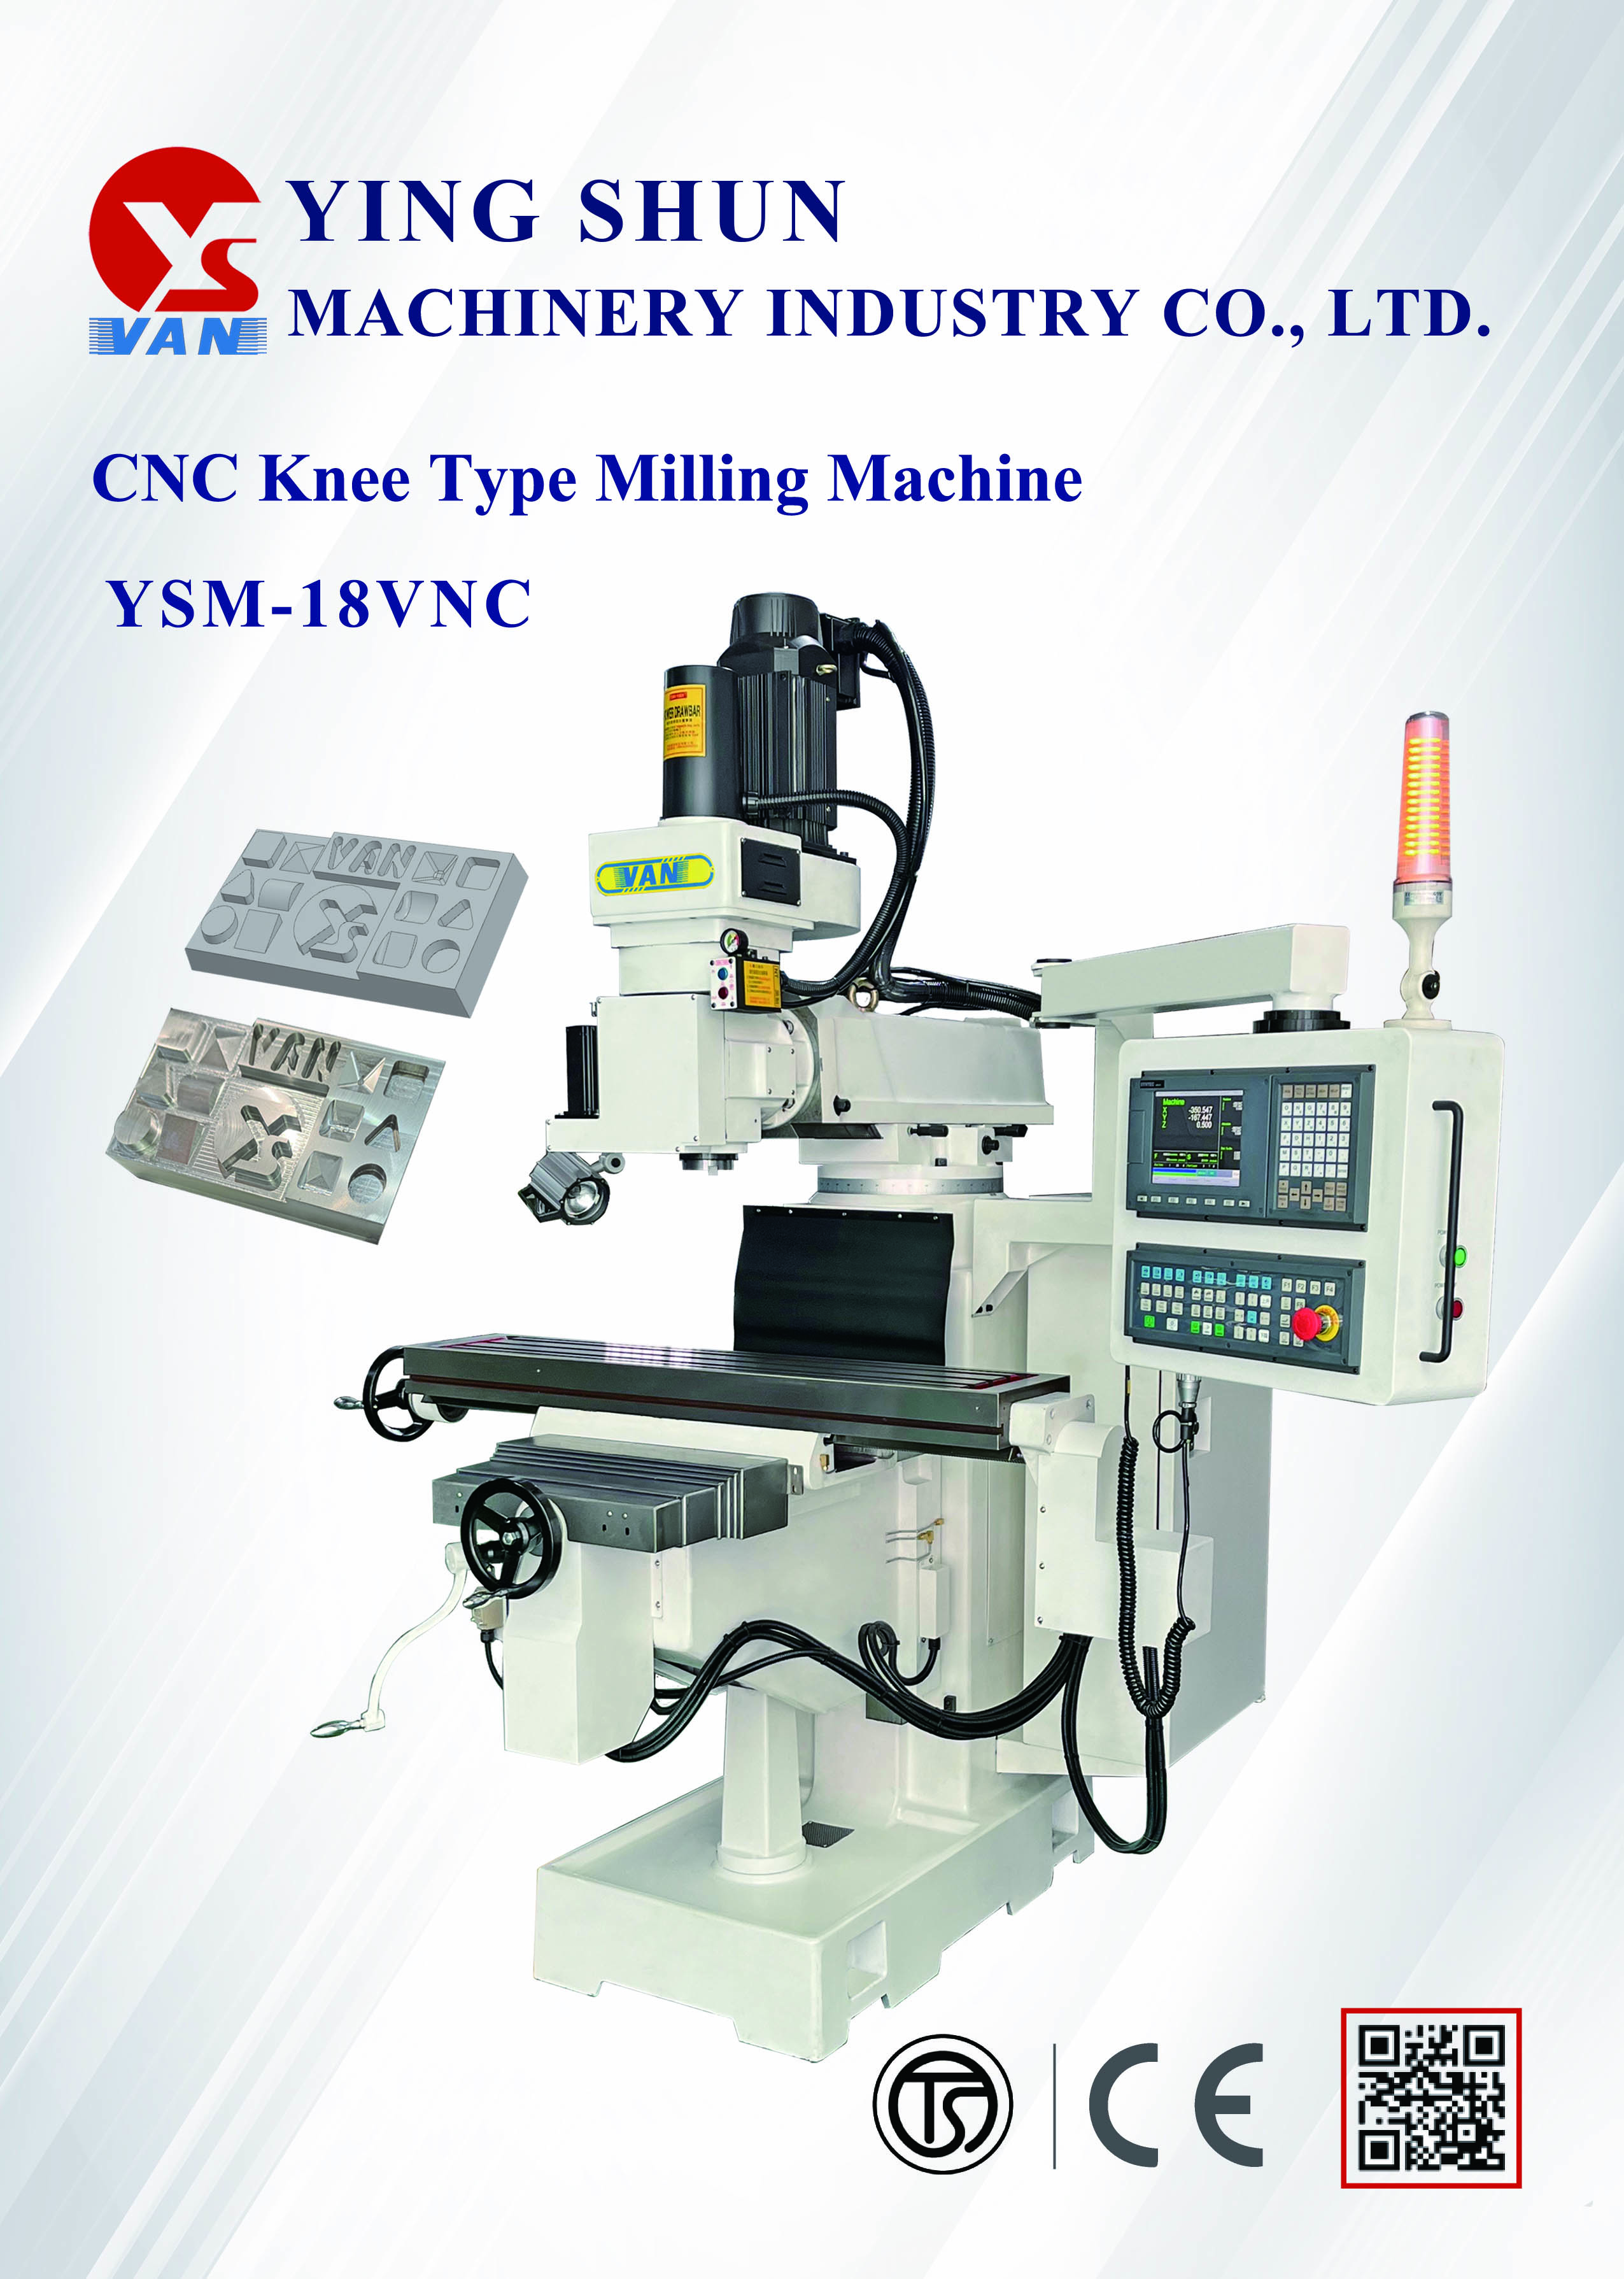 Catalog|YSM-18VNC catalogue